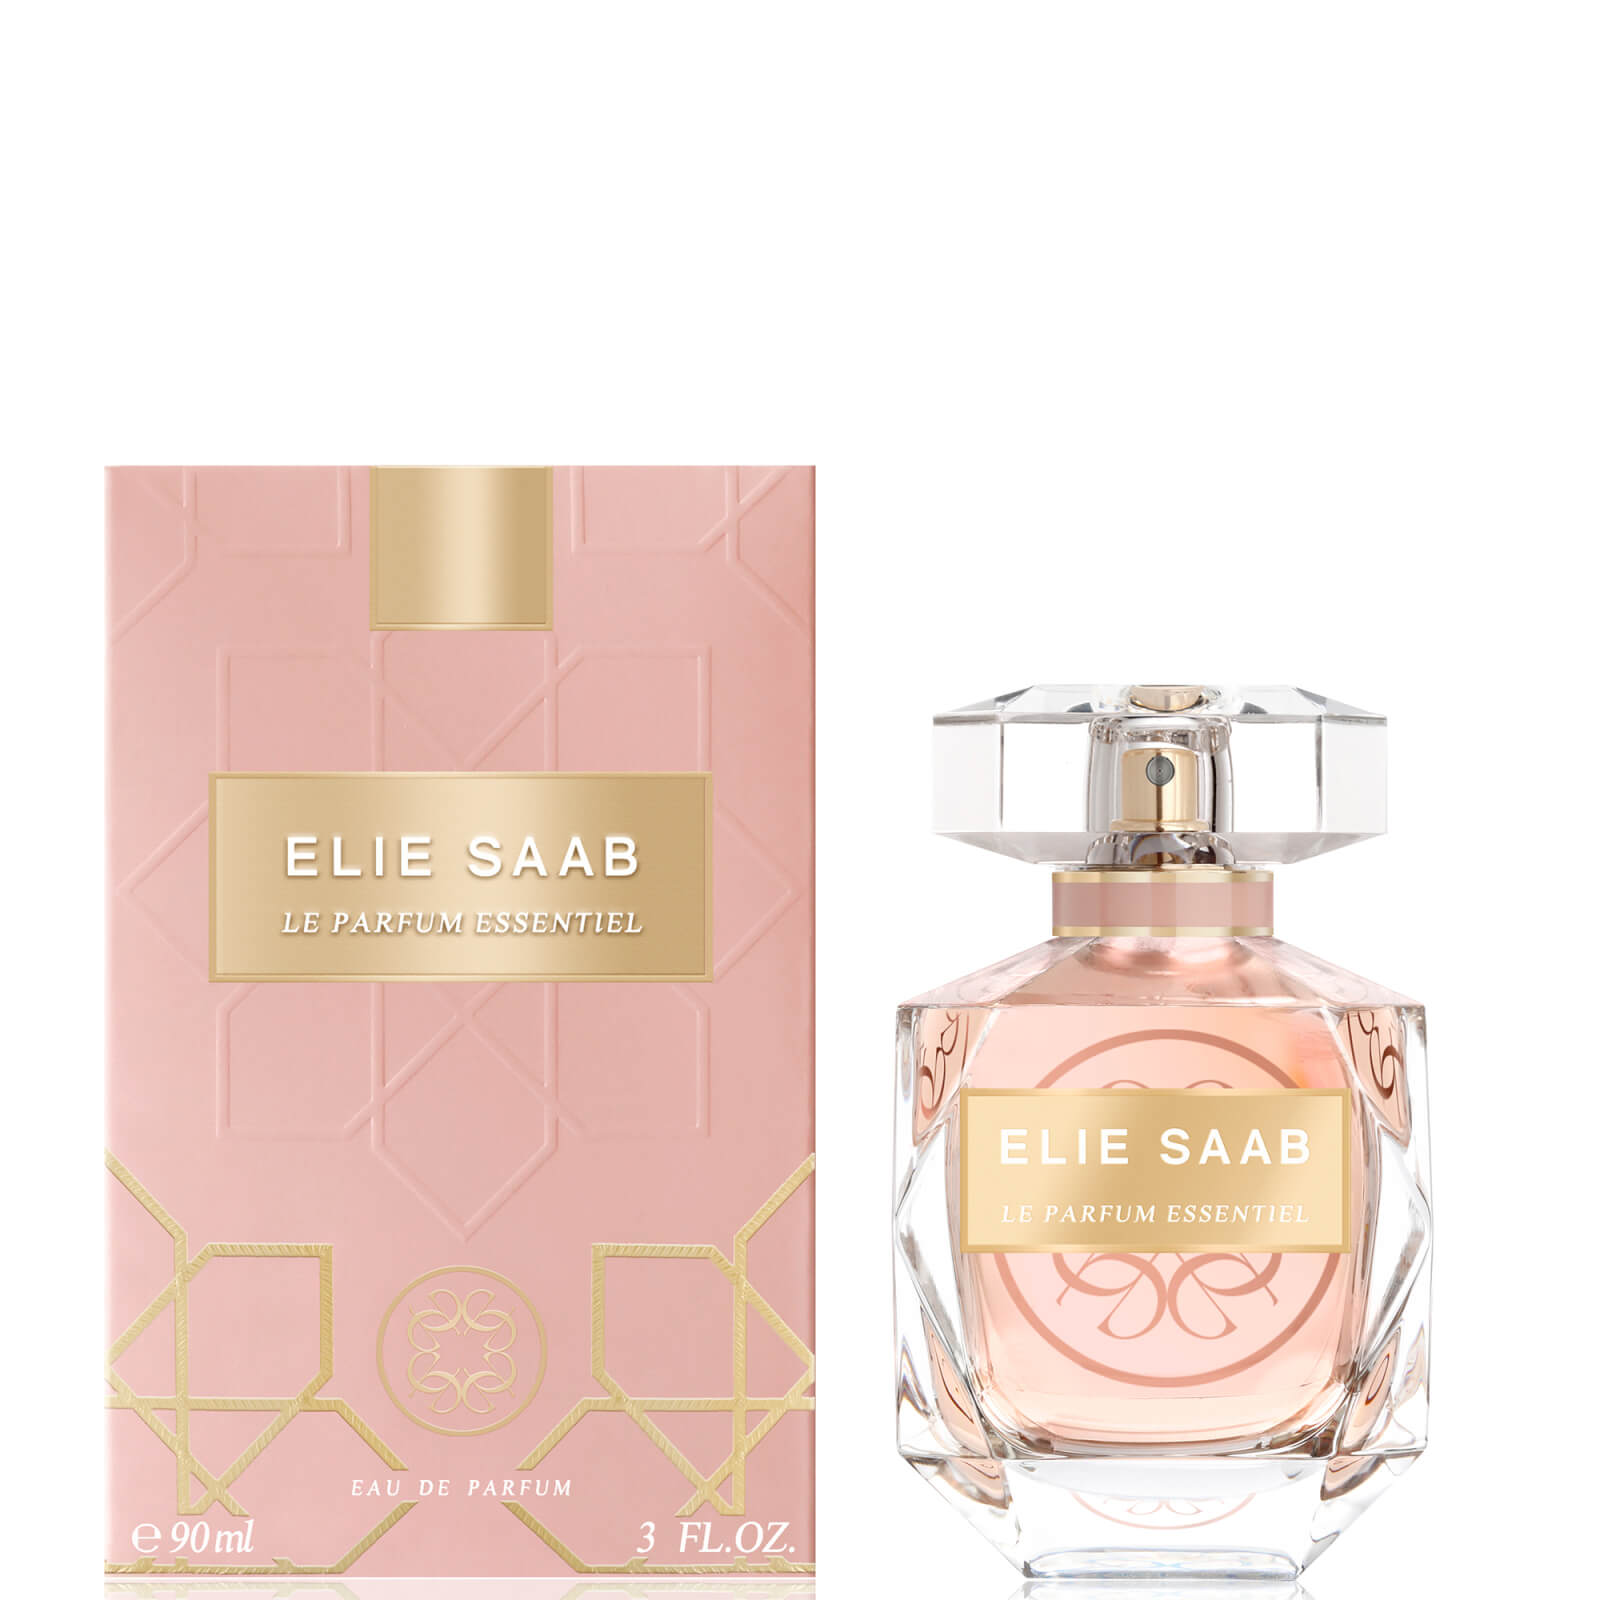 Image of Elie Saab Le Parfum Essentiel Eau de Parfum Profumo 90ml